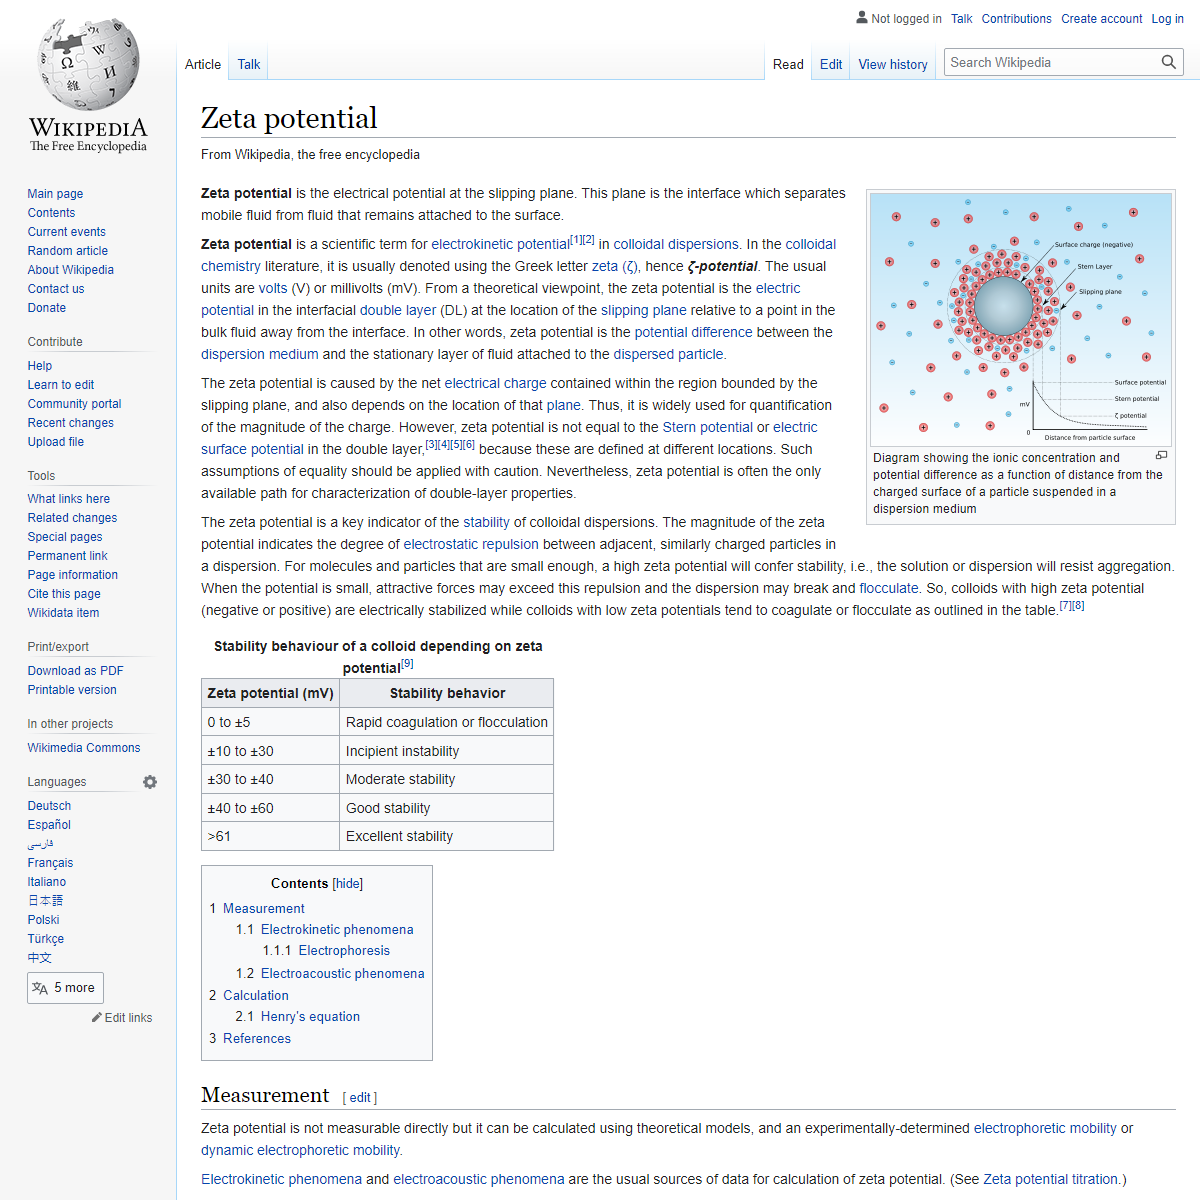 A complete backup of https://en.wikipedia.org/wiki/Zeta_potential